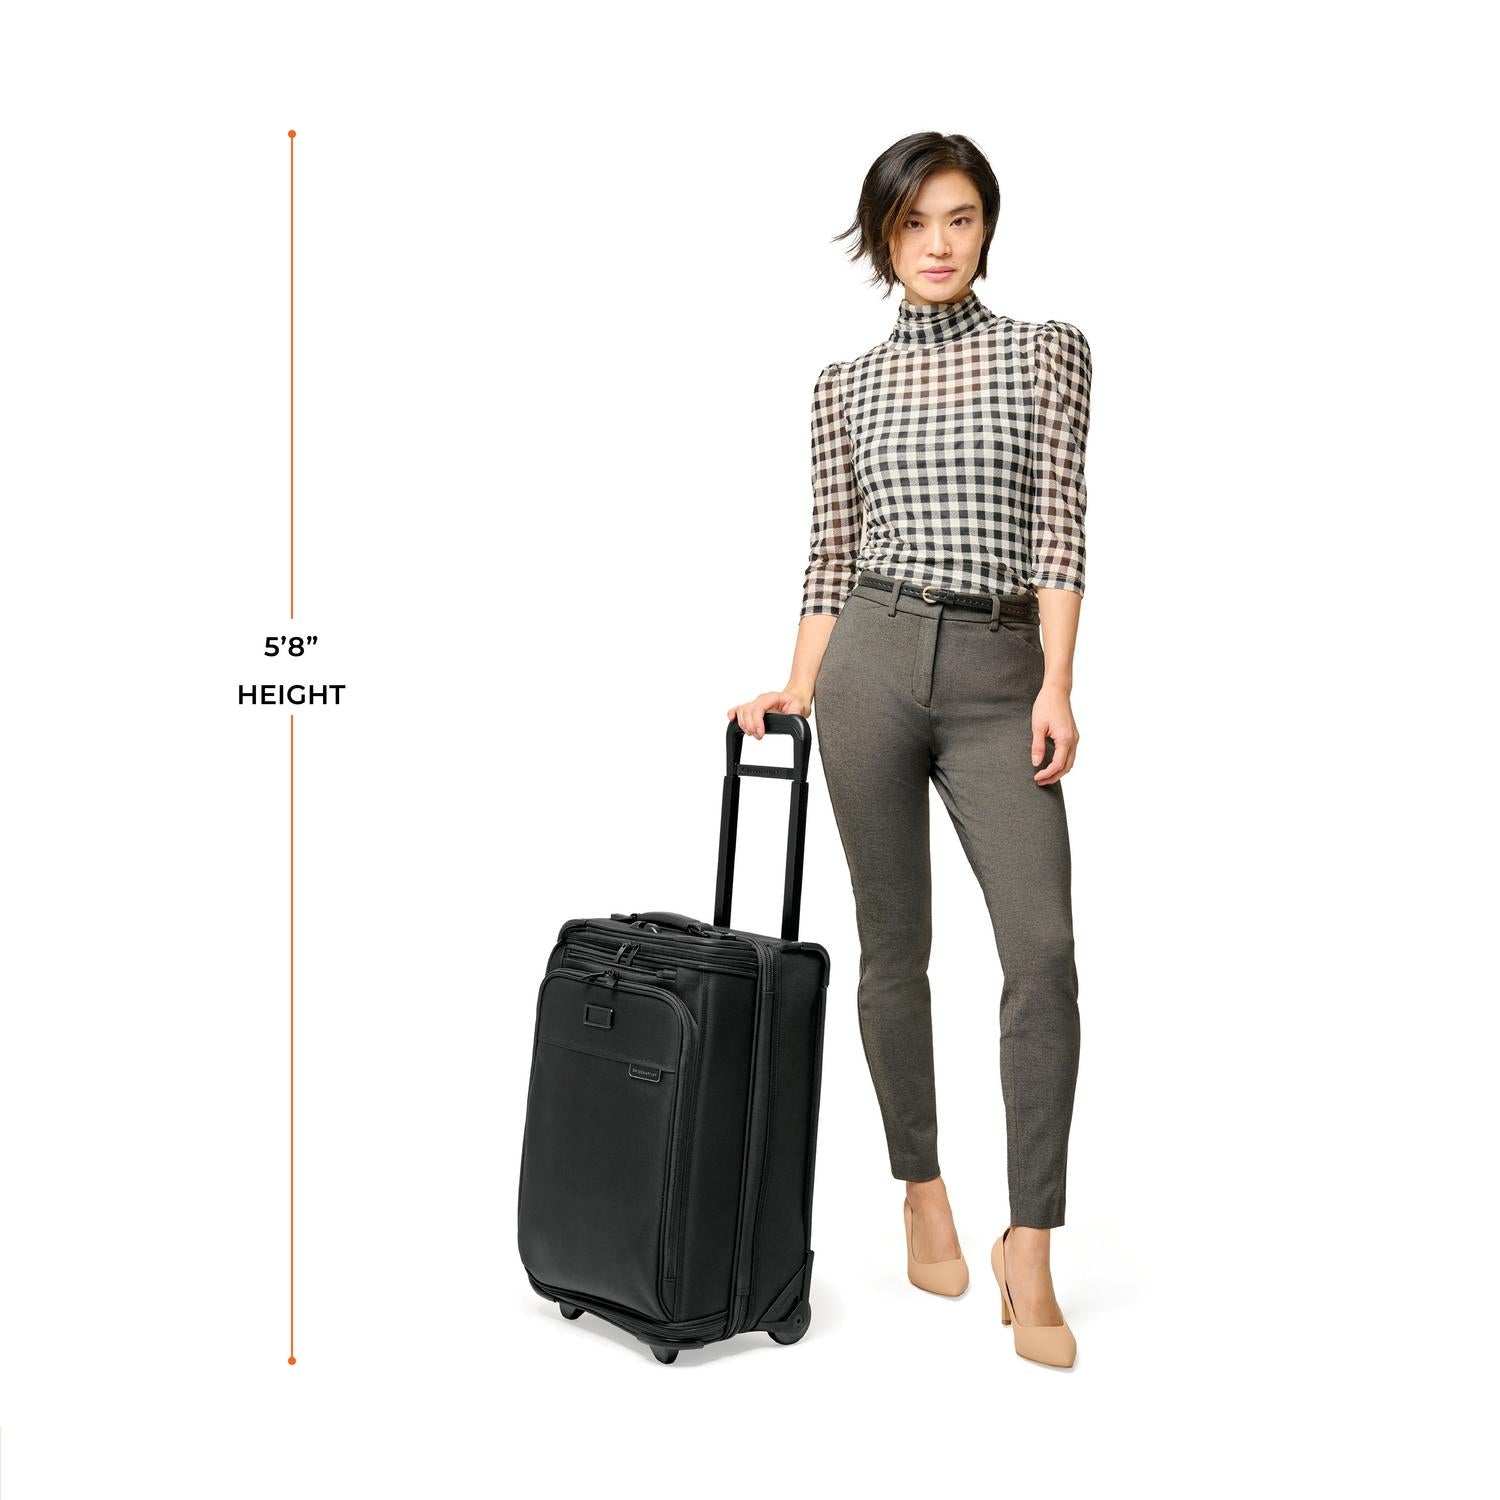 Baseline Tall Carry-on 2-Wheel Garment Bag